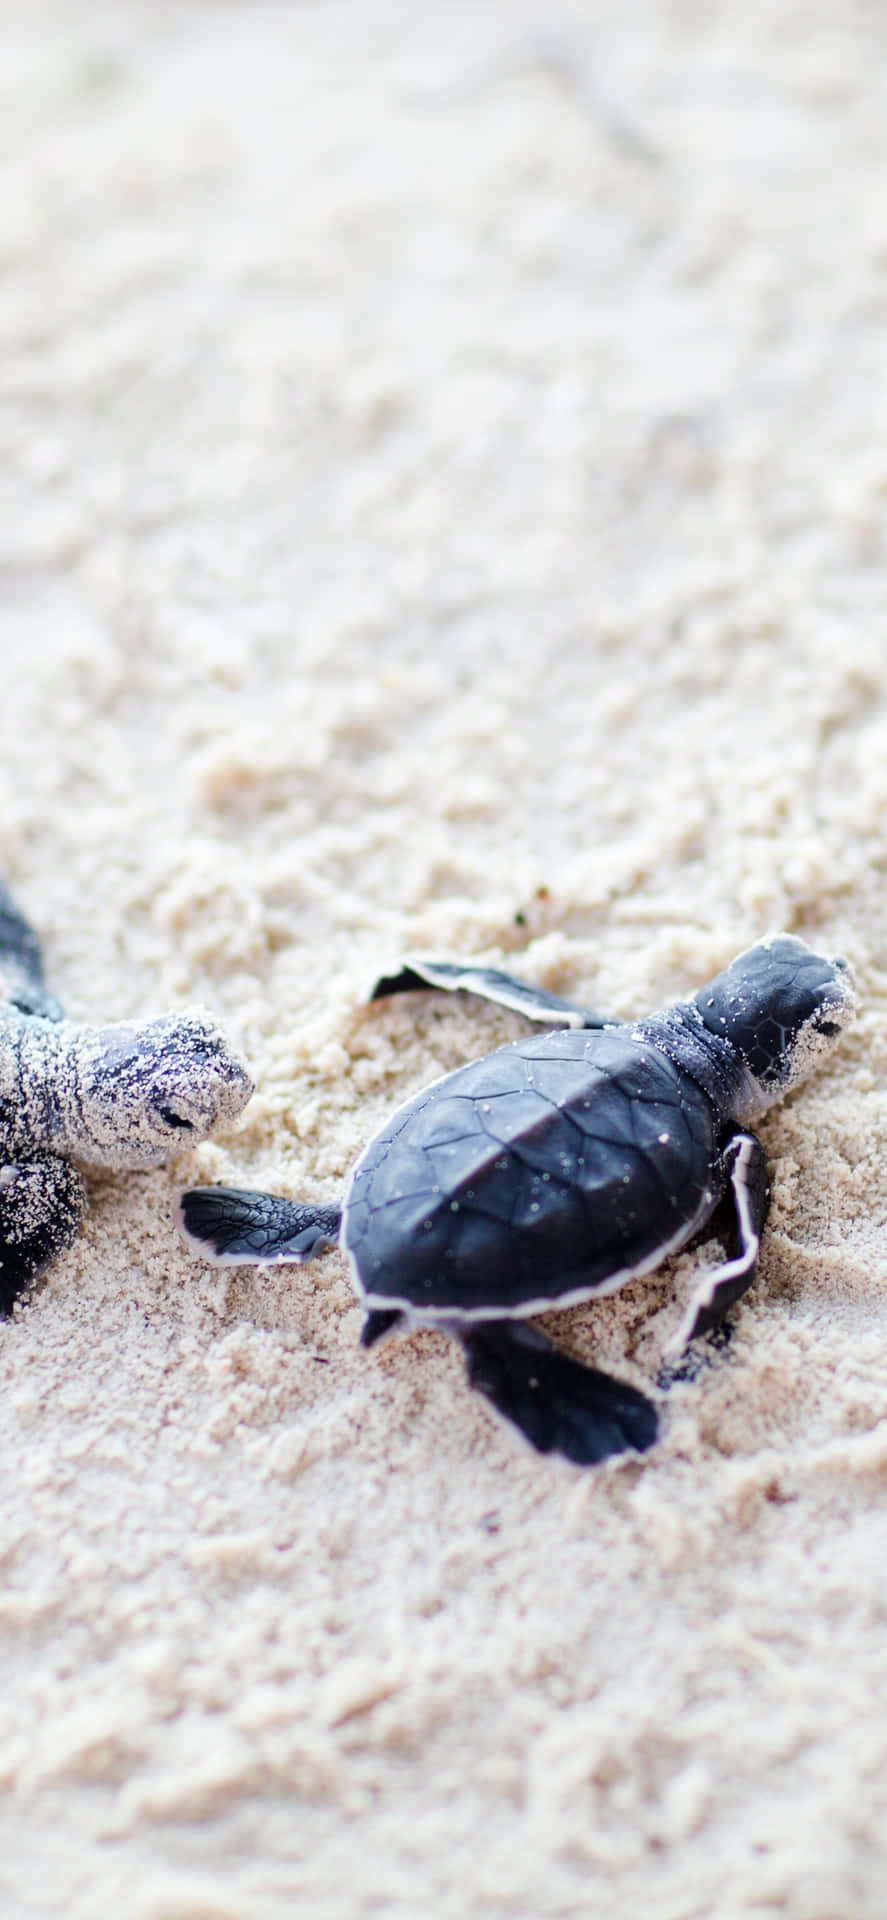 Baby Turtles Journeyto Sea.jpg Wallpaper